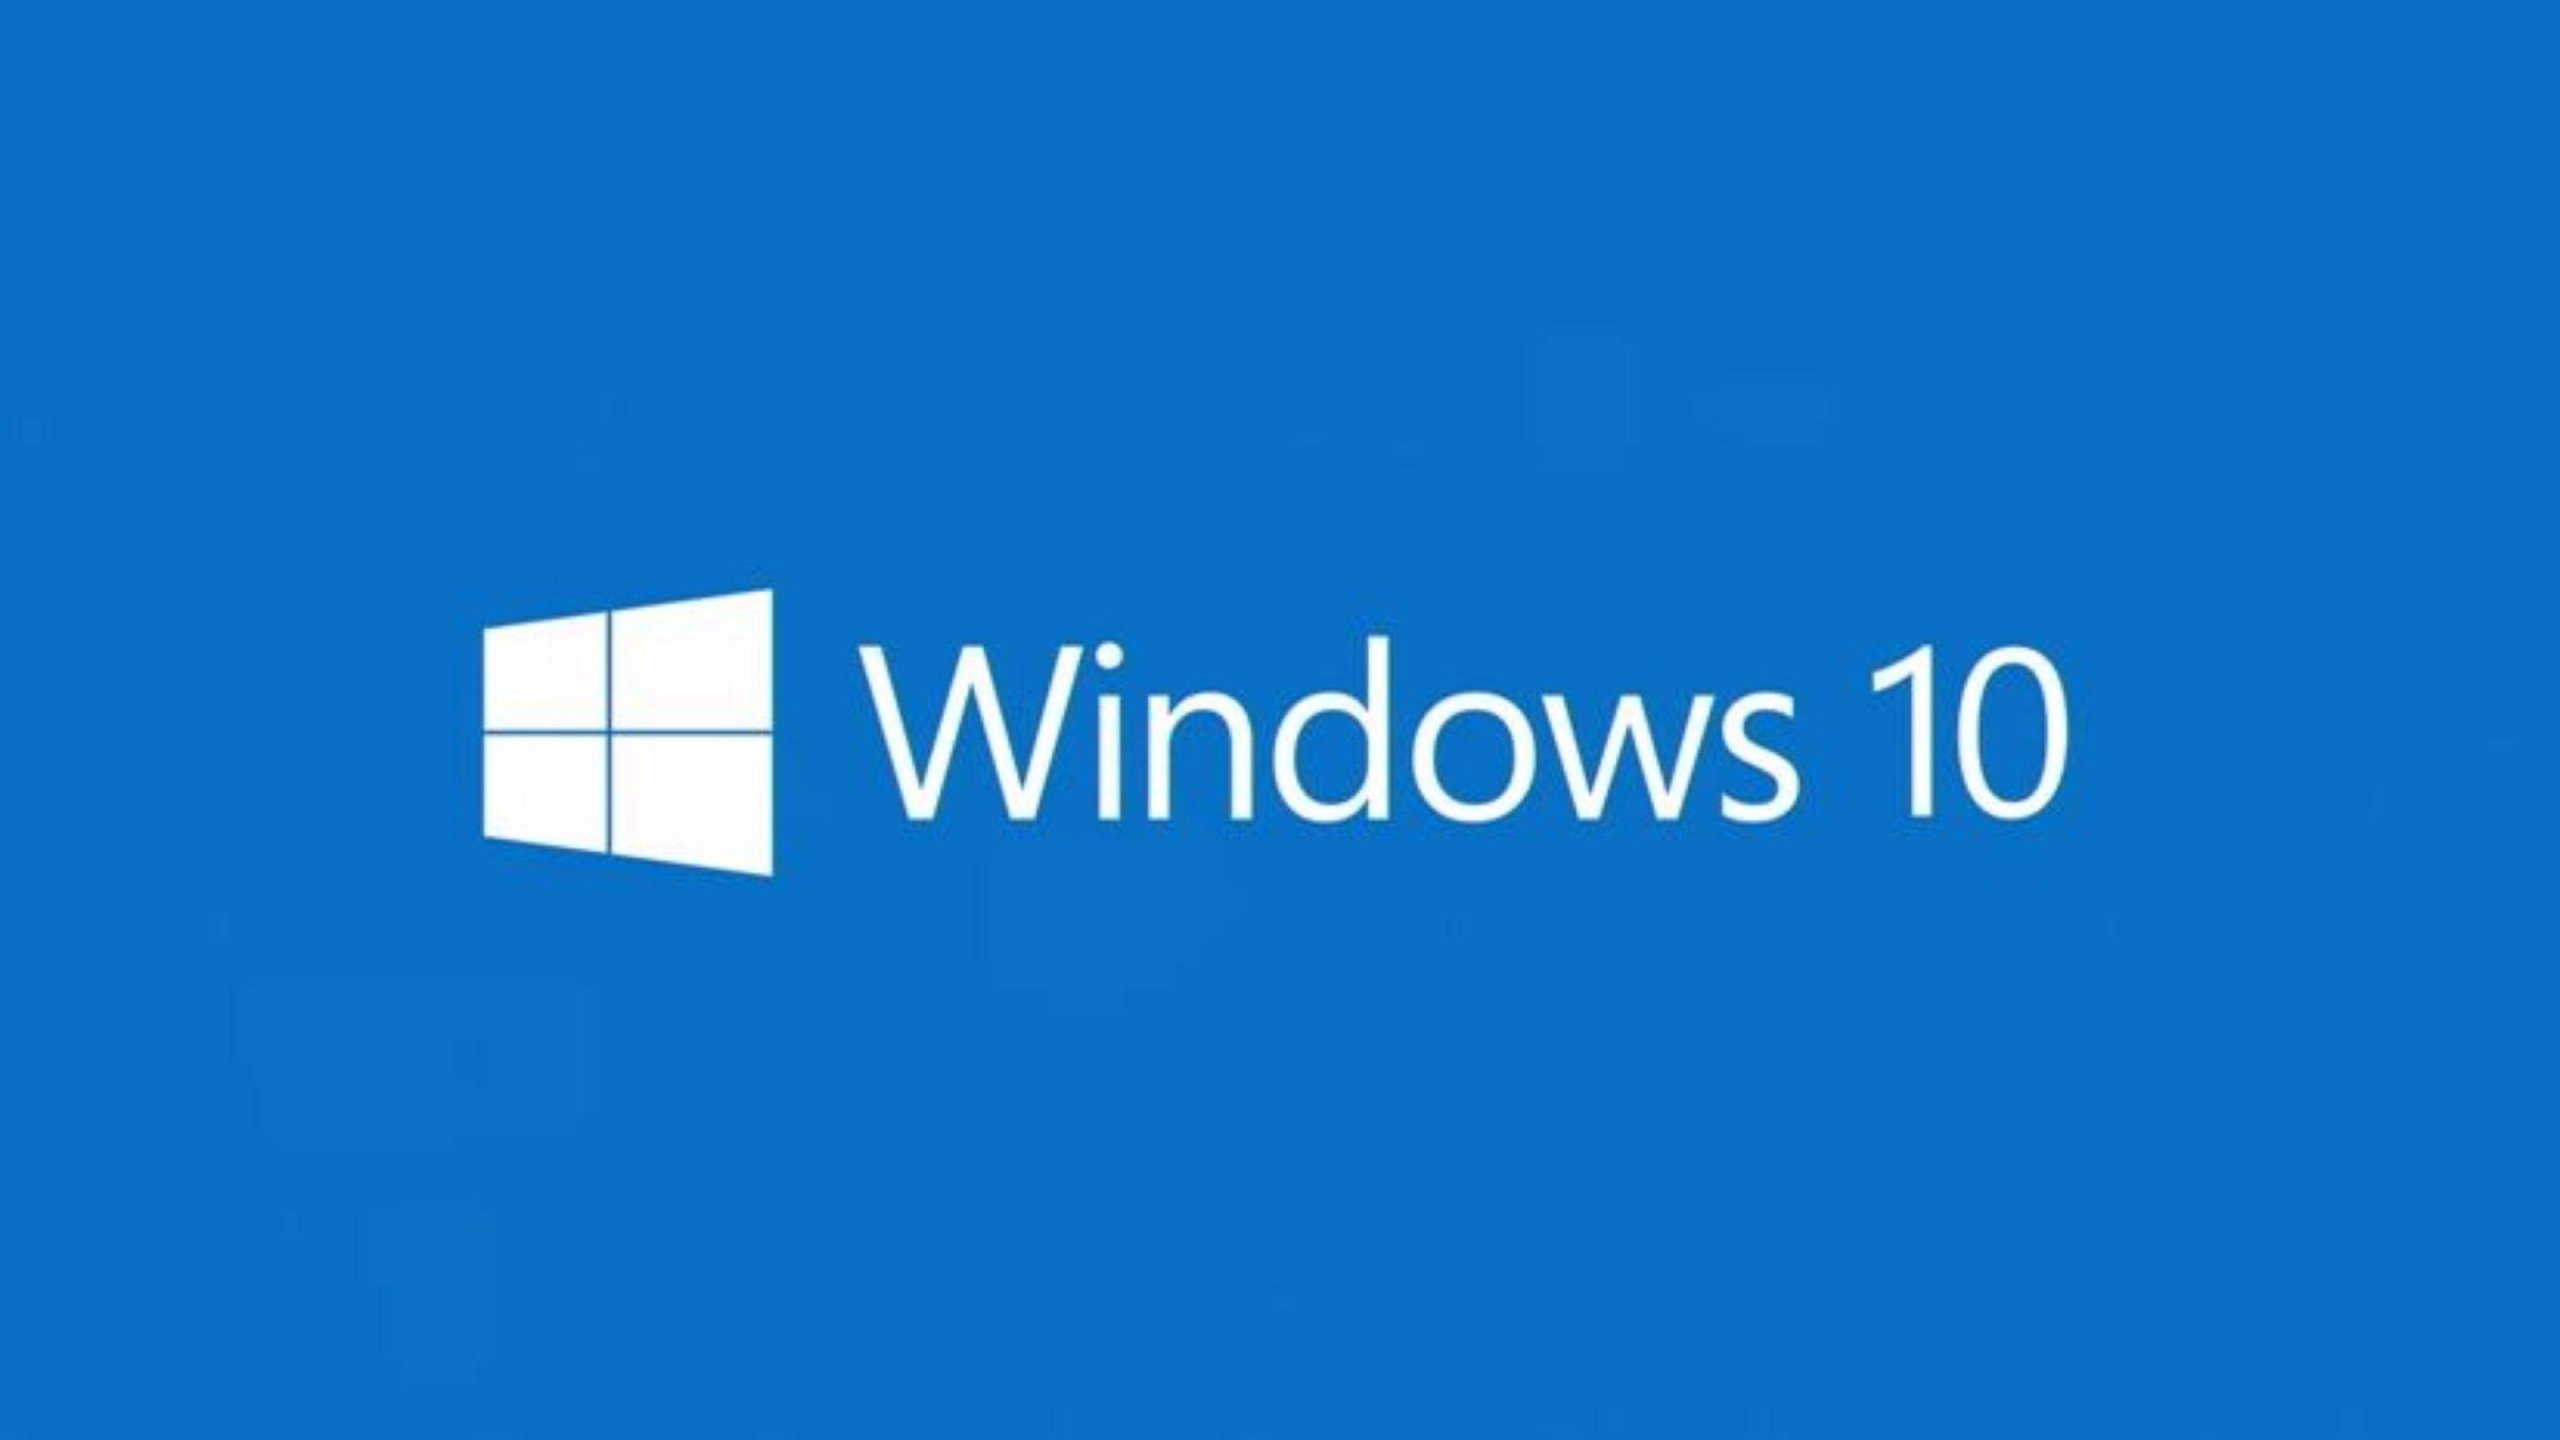 windows 10 technical preview windows 10 logo microsoft 2560x1440jpg 2560x1440